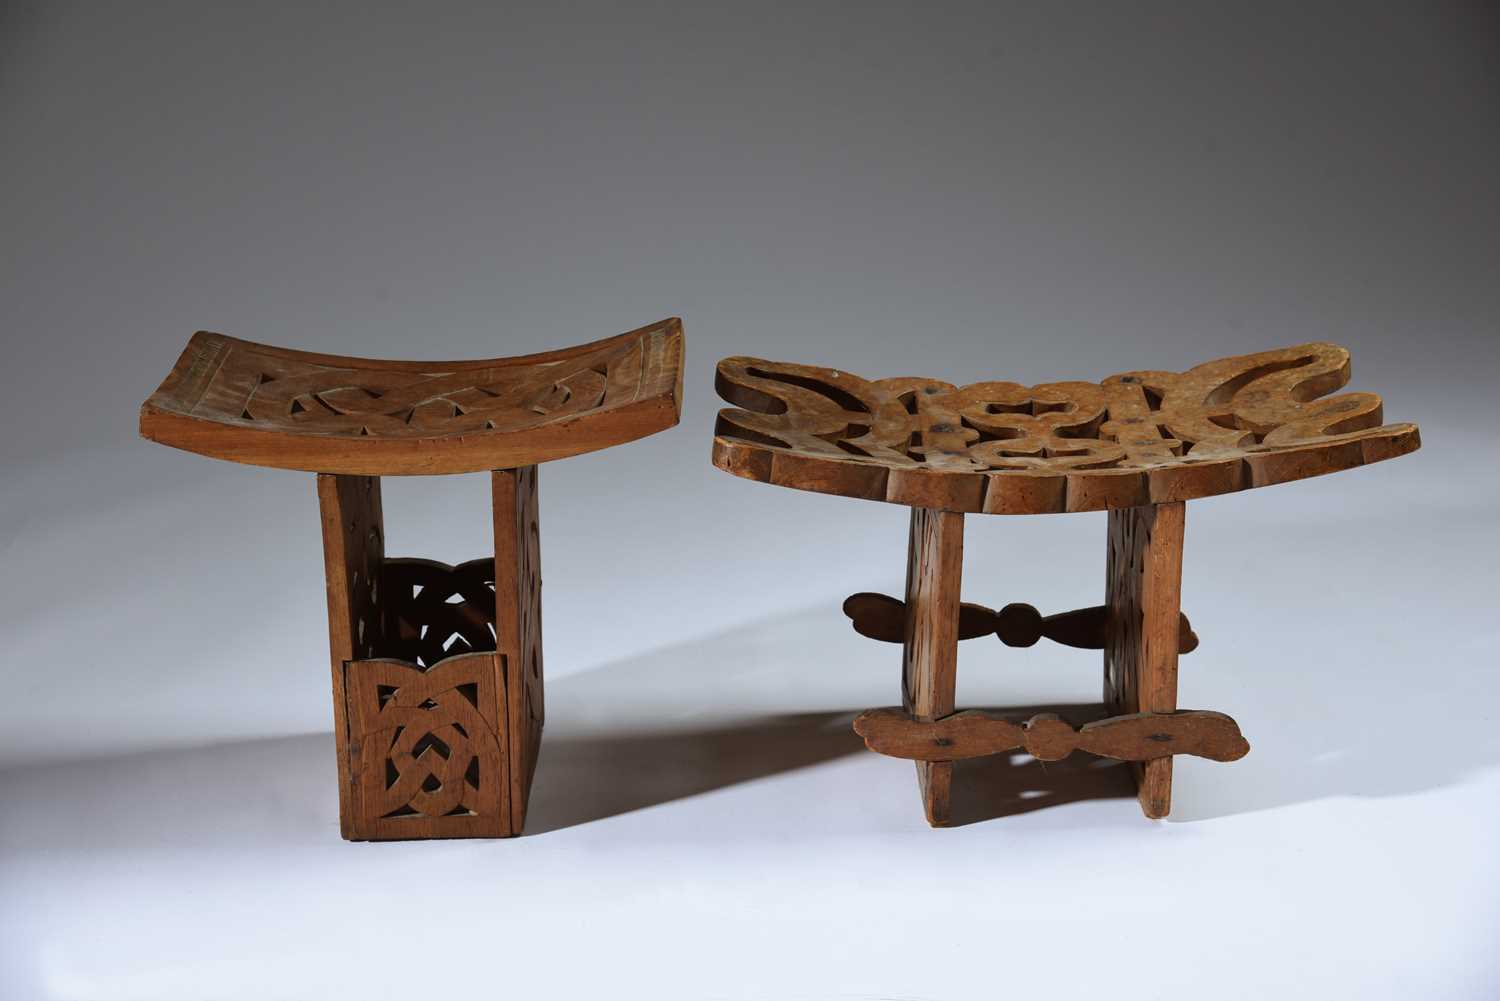 Two Suriname stools